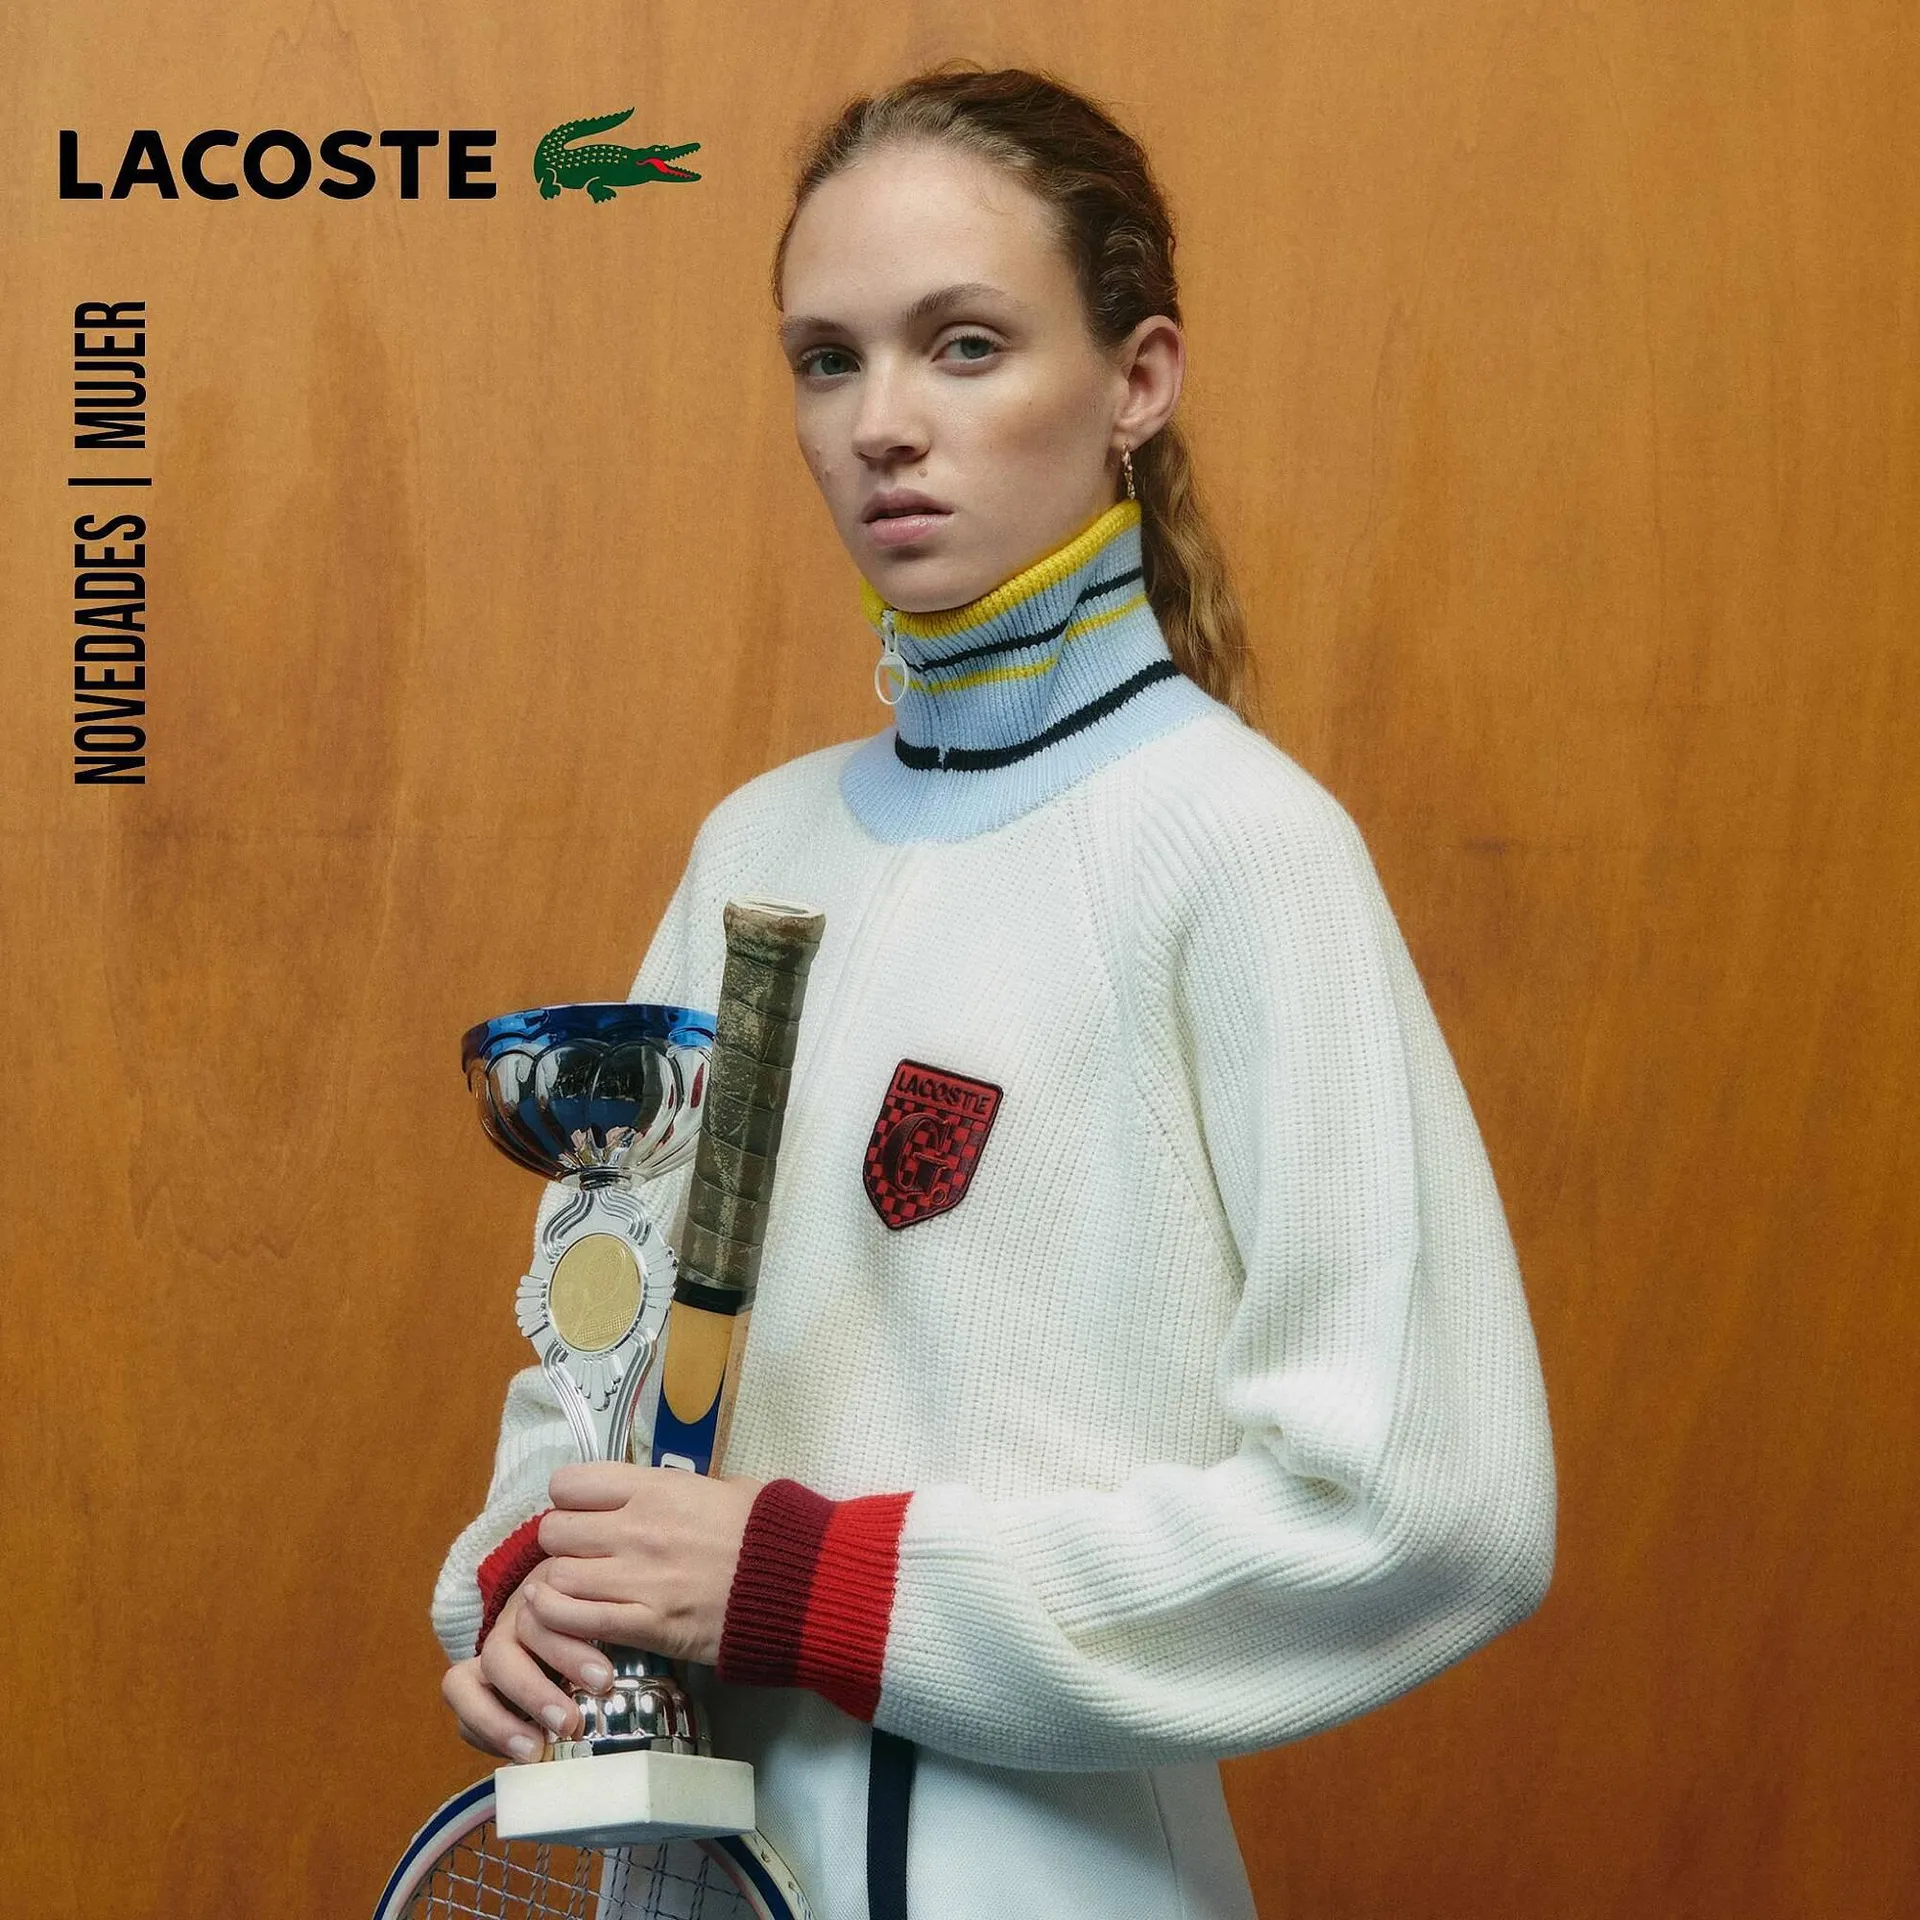 Catálogo Lacoste - 1